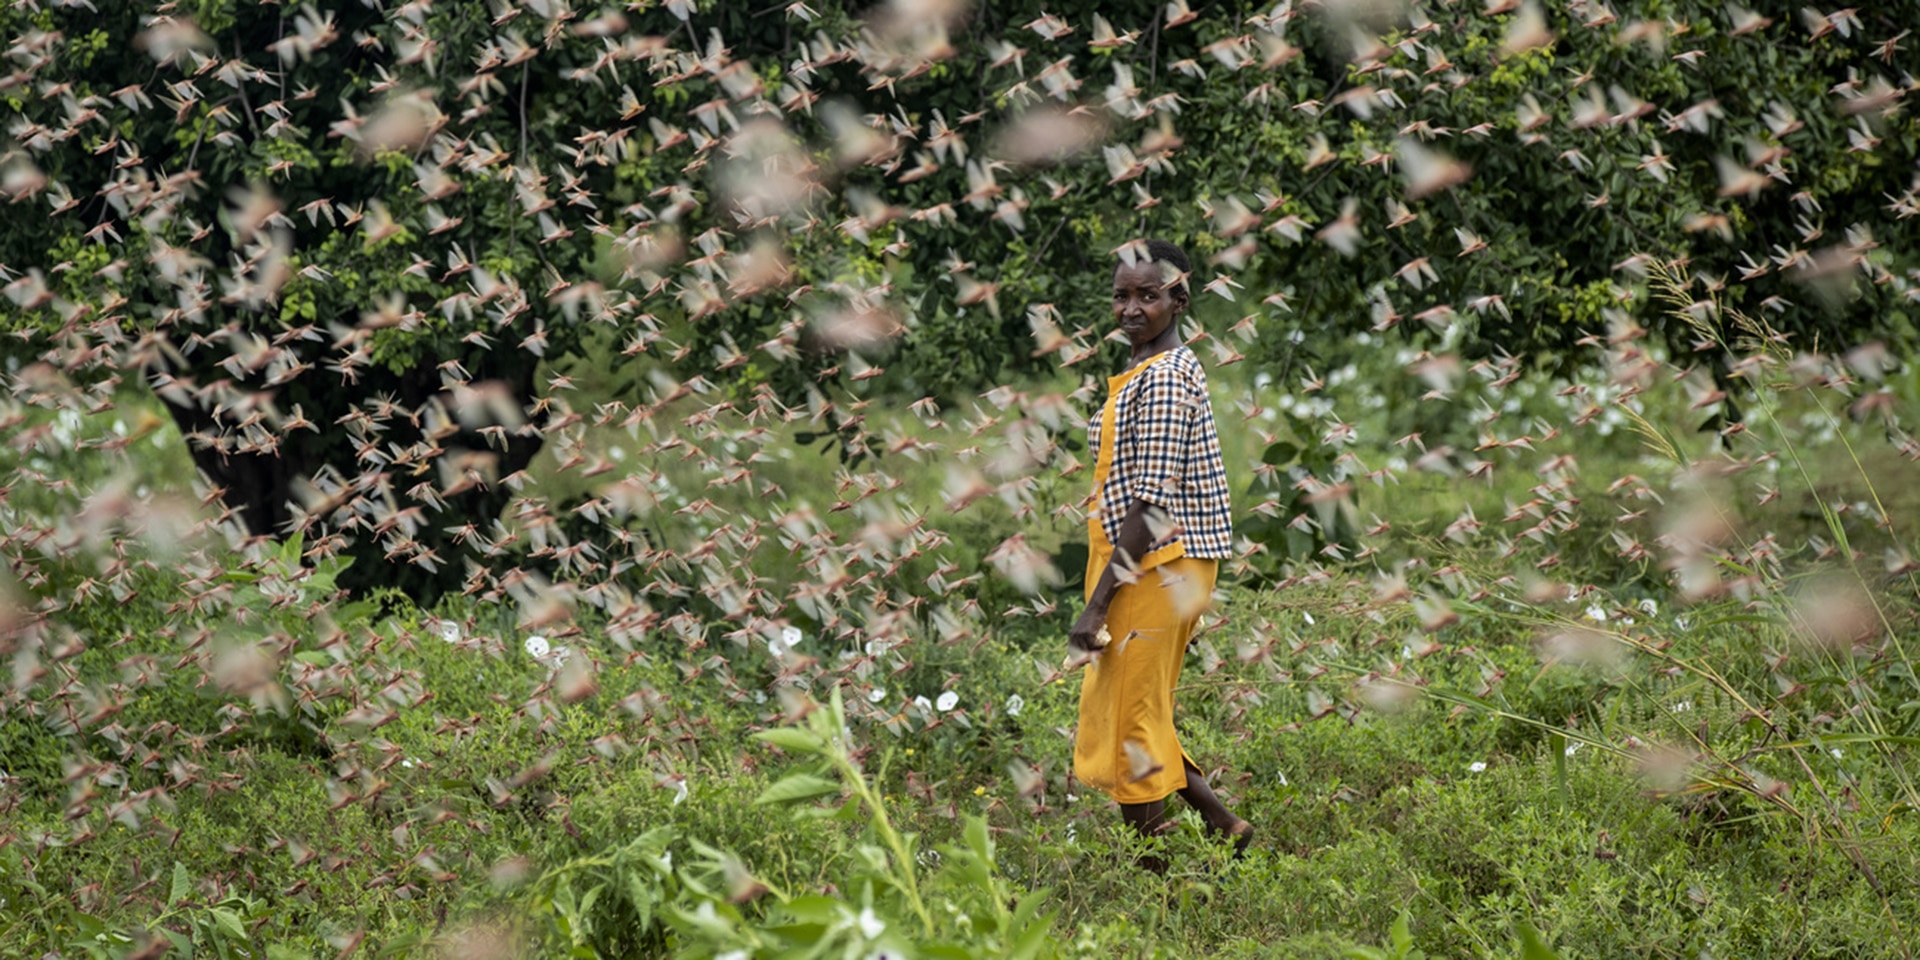 A farmer walks through a swarm of desert locusts feeding on her crops in the village of Katitika, Kenya.